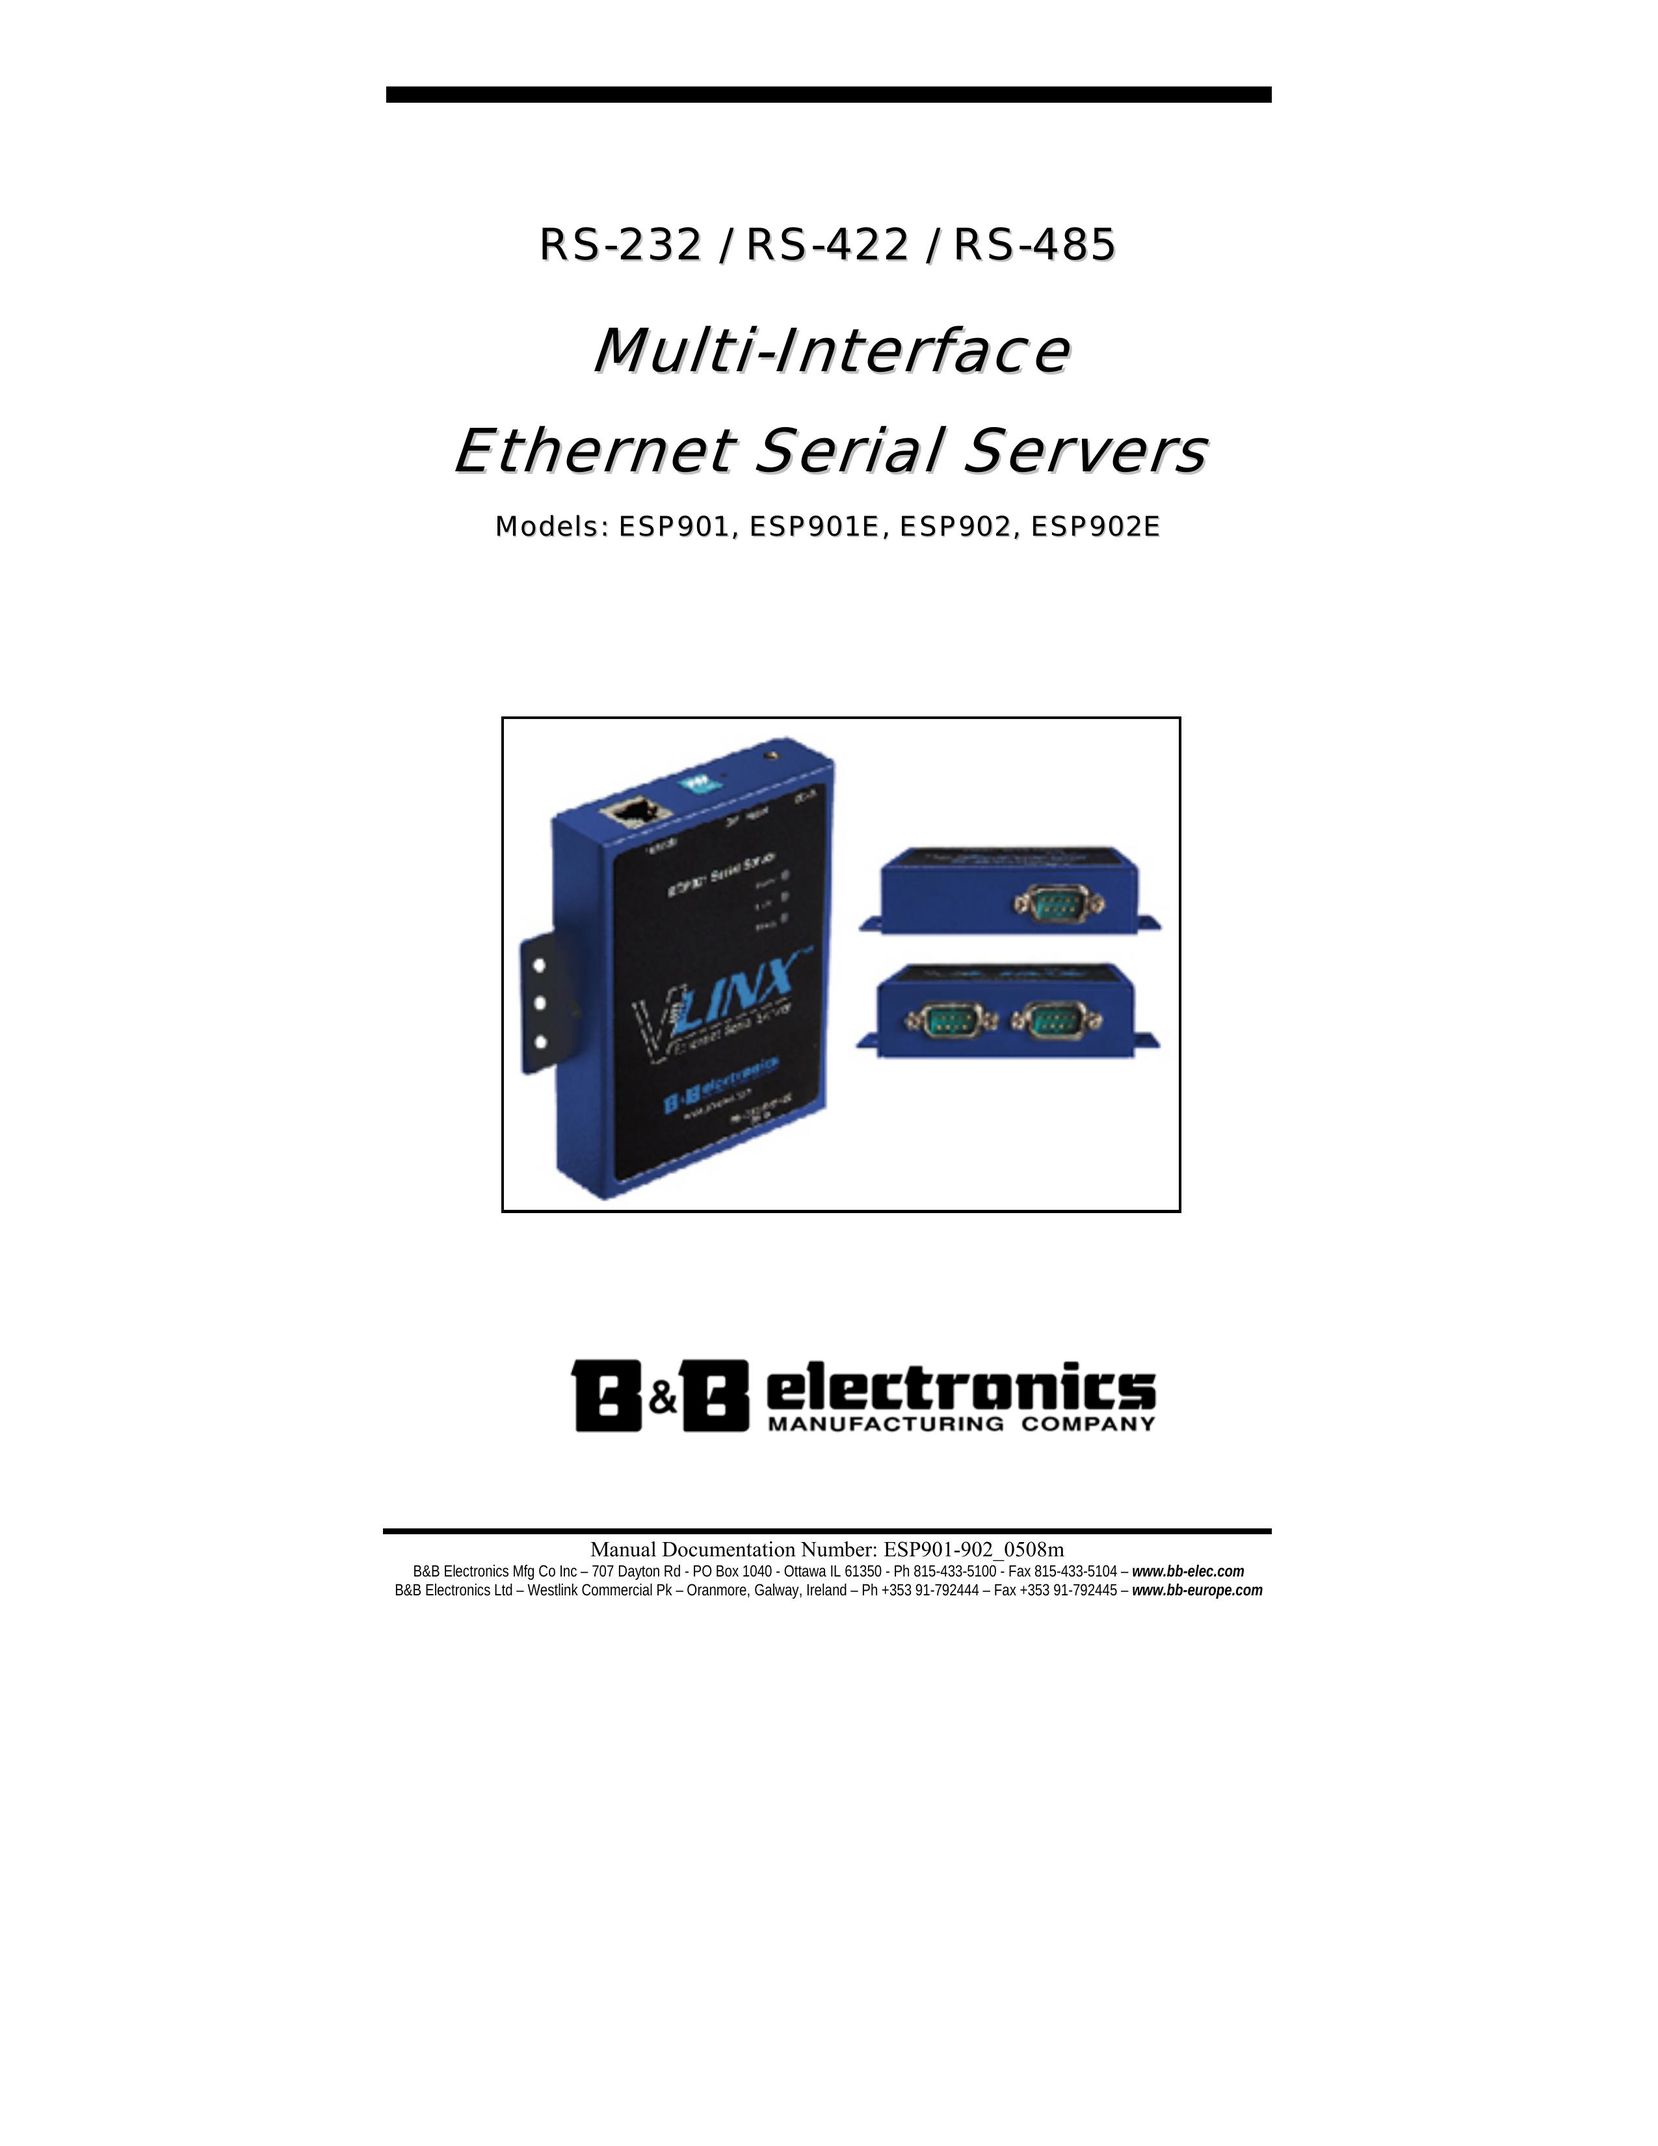 B&B Electronics ESP901E Home Theater Server User Manual